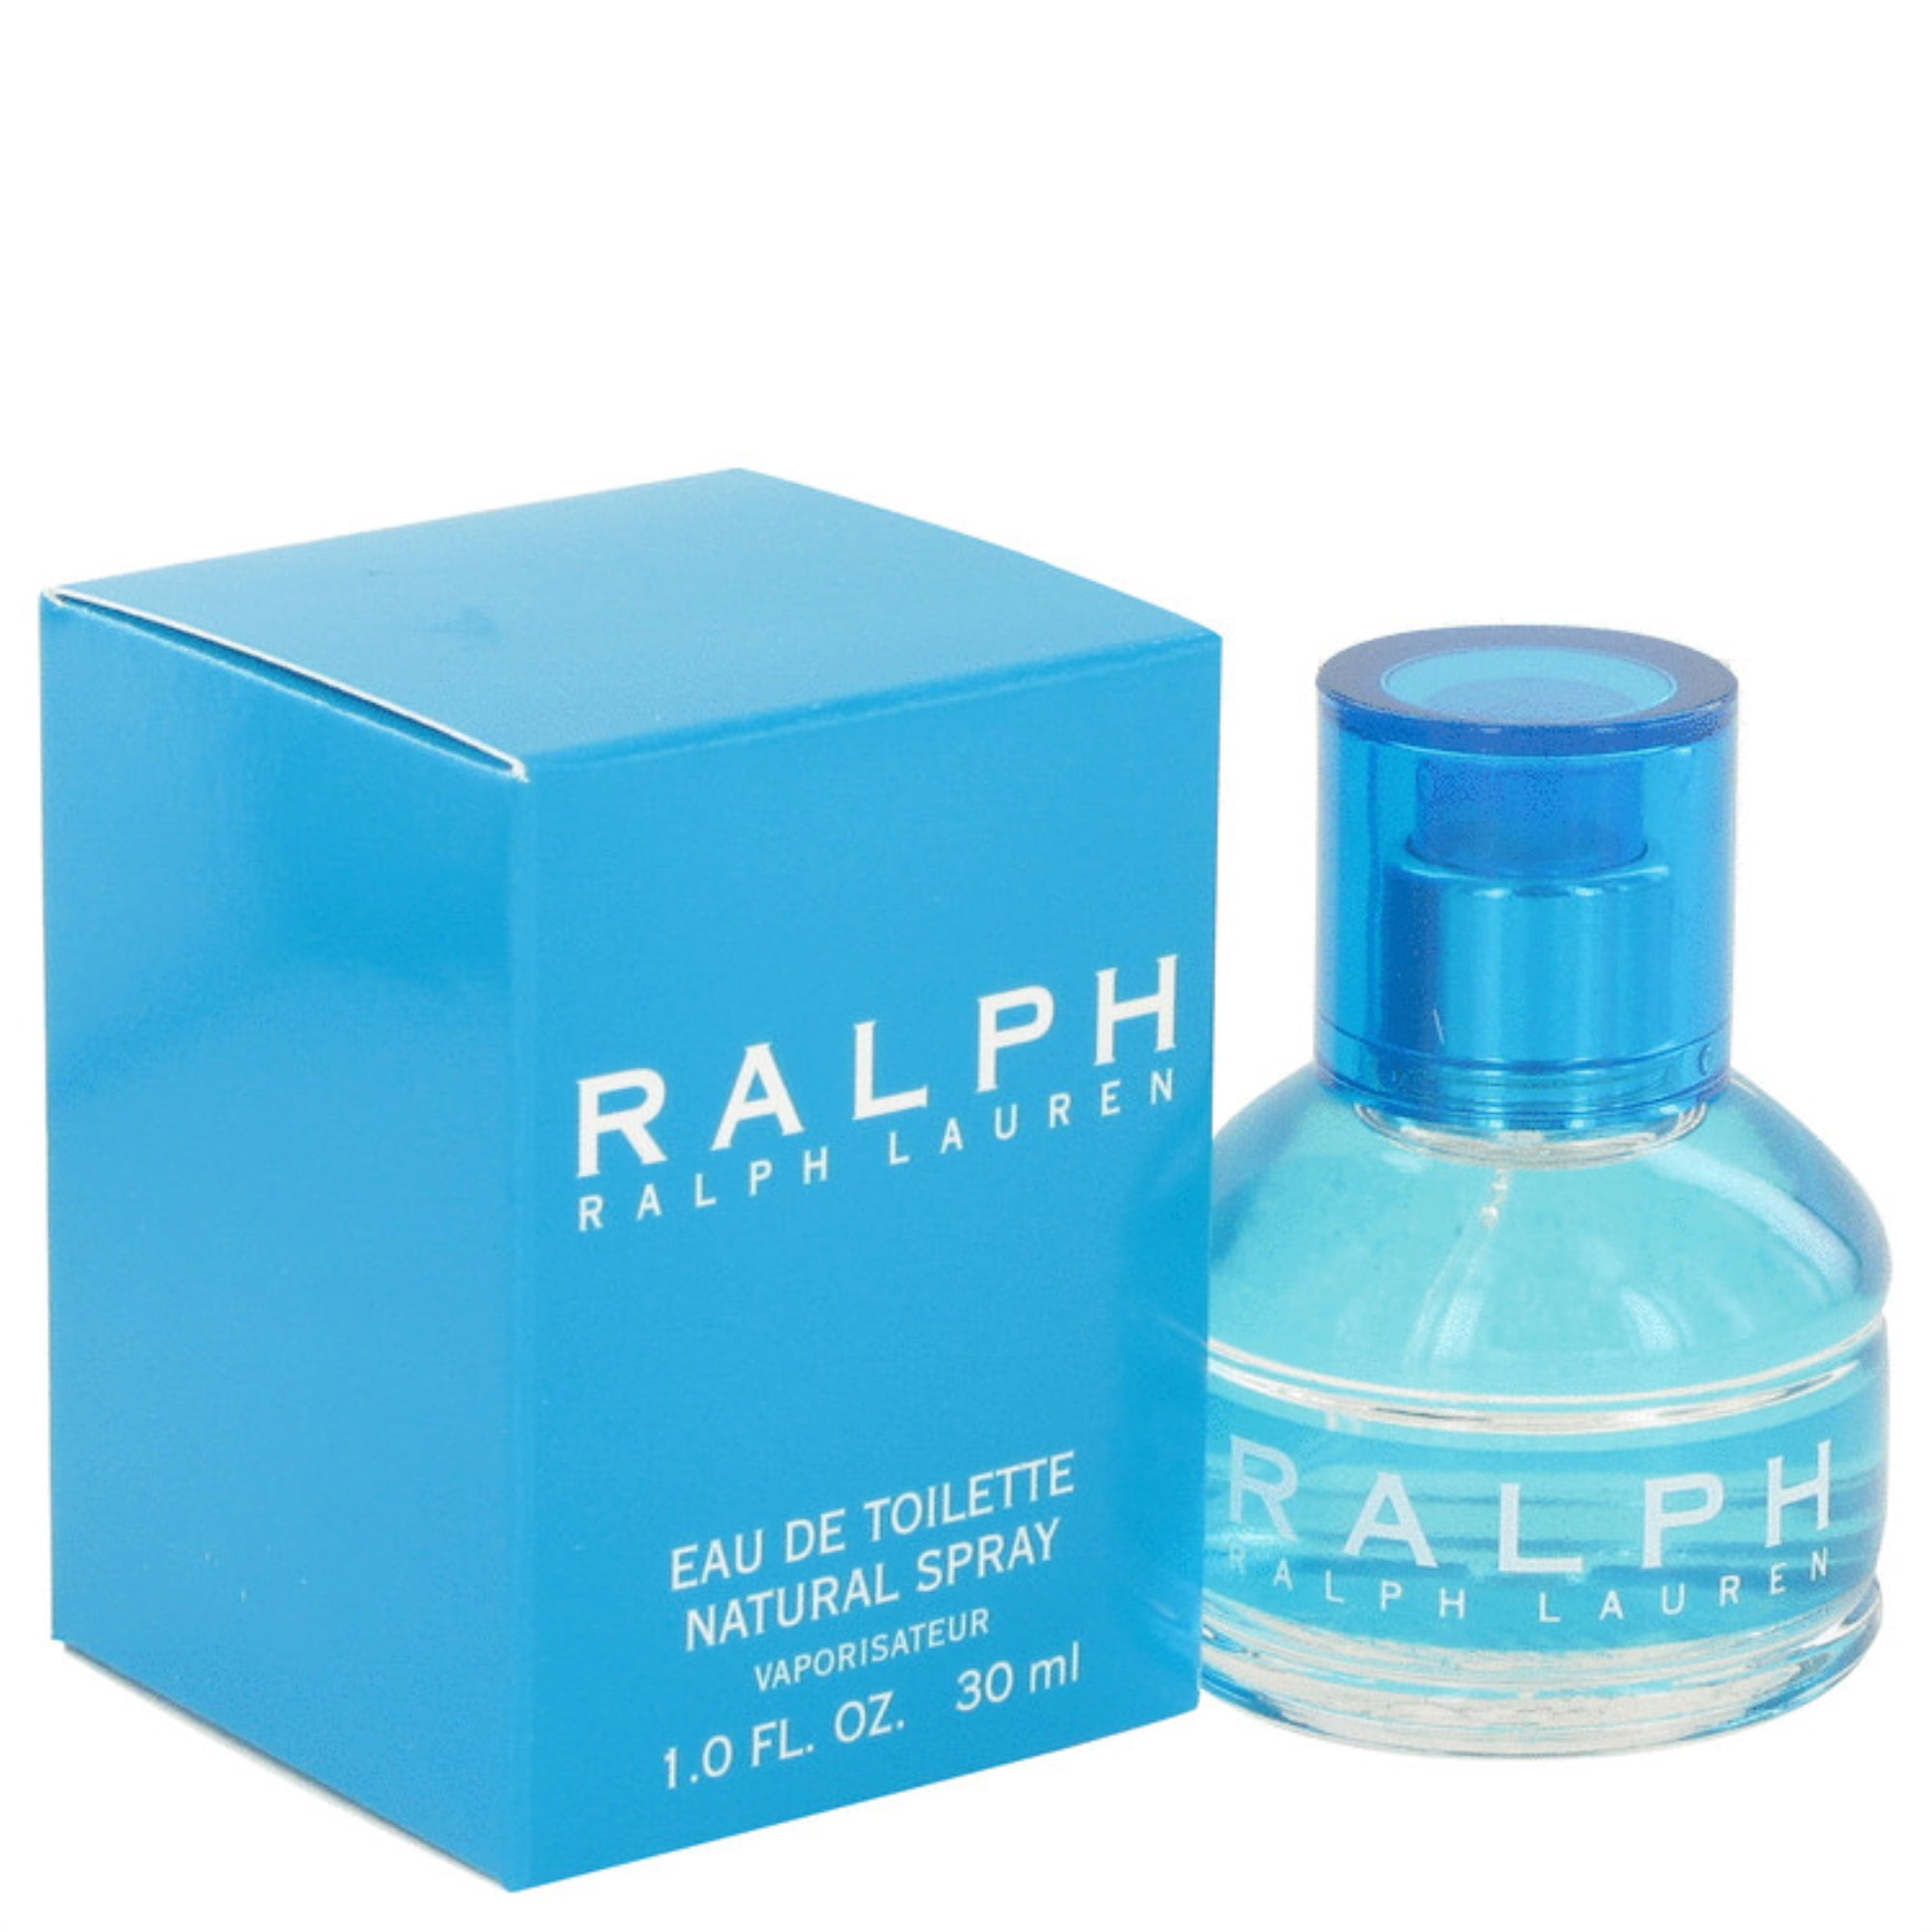 Ralph Lauren LAUREN classic eau de toilette Fragrance Vault Lake